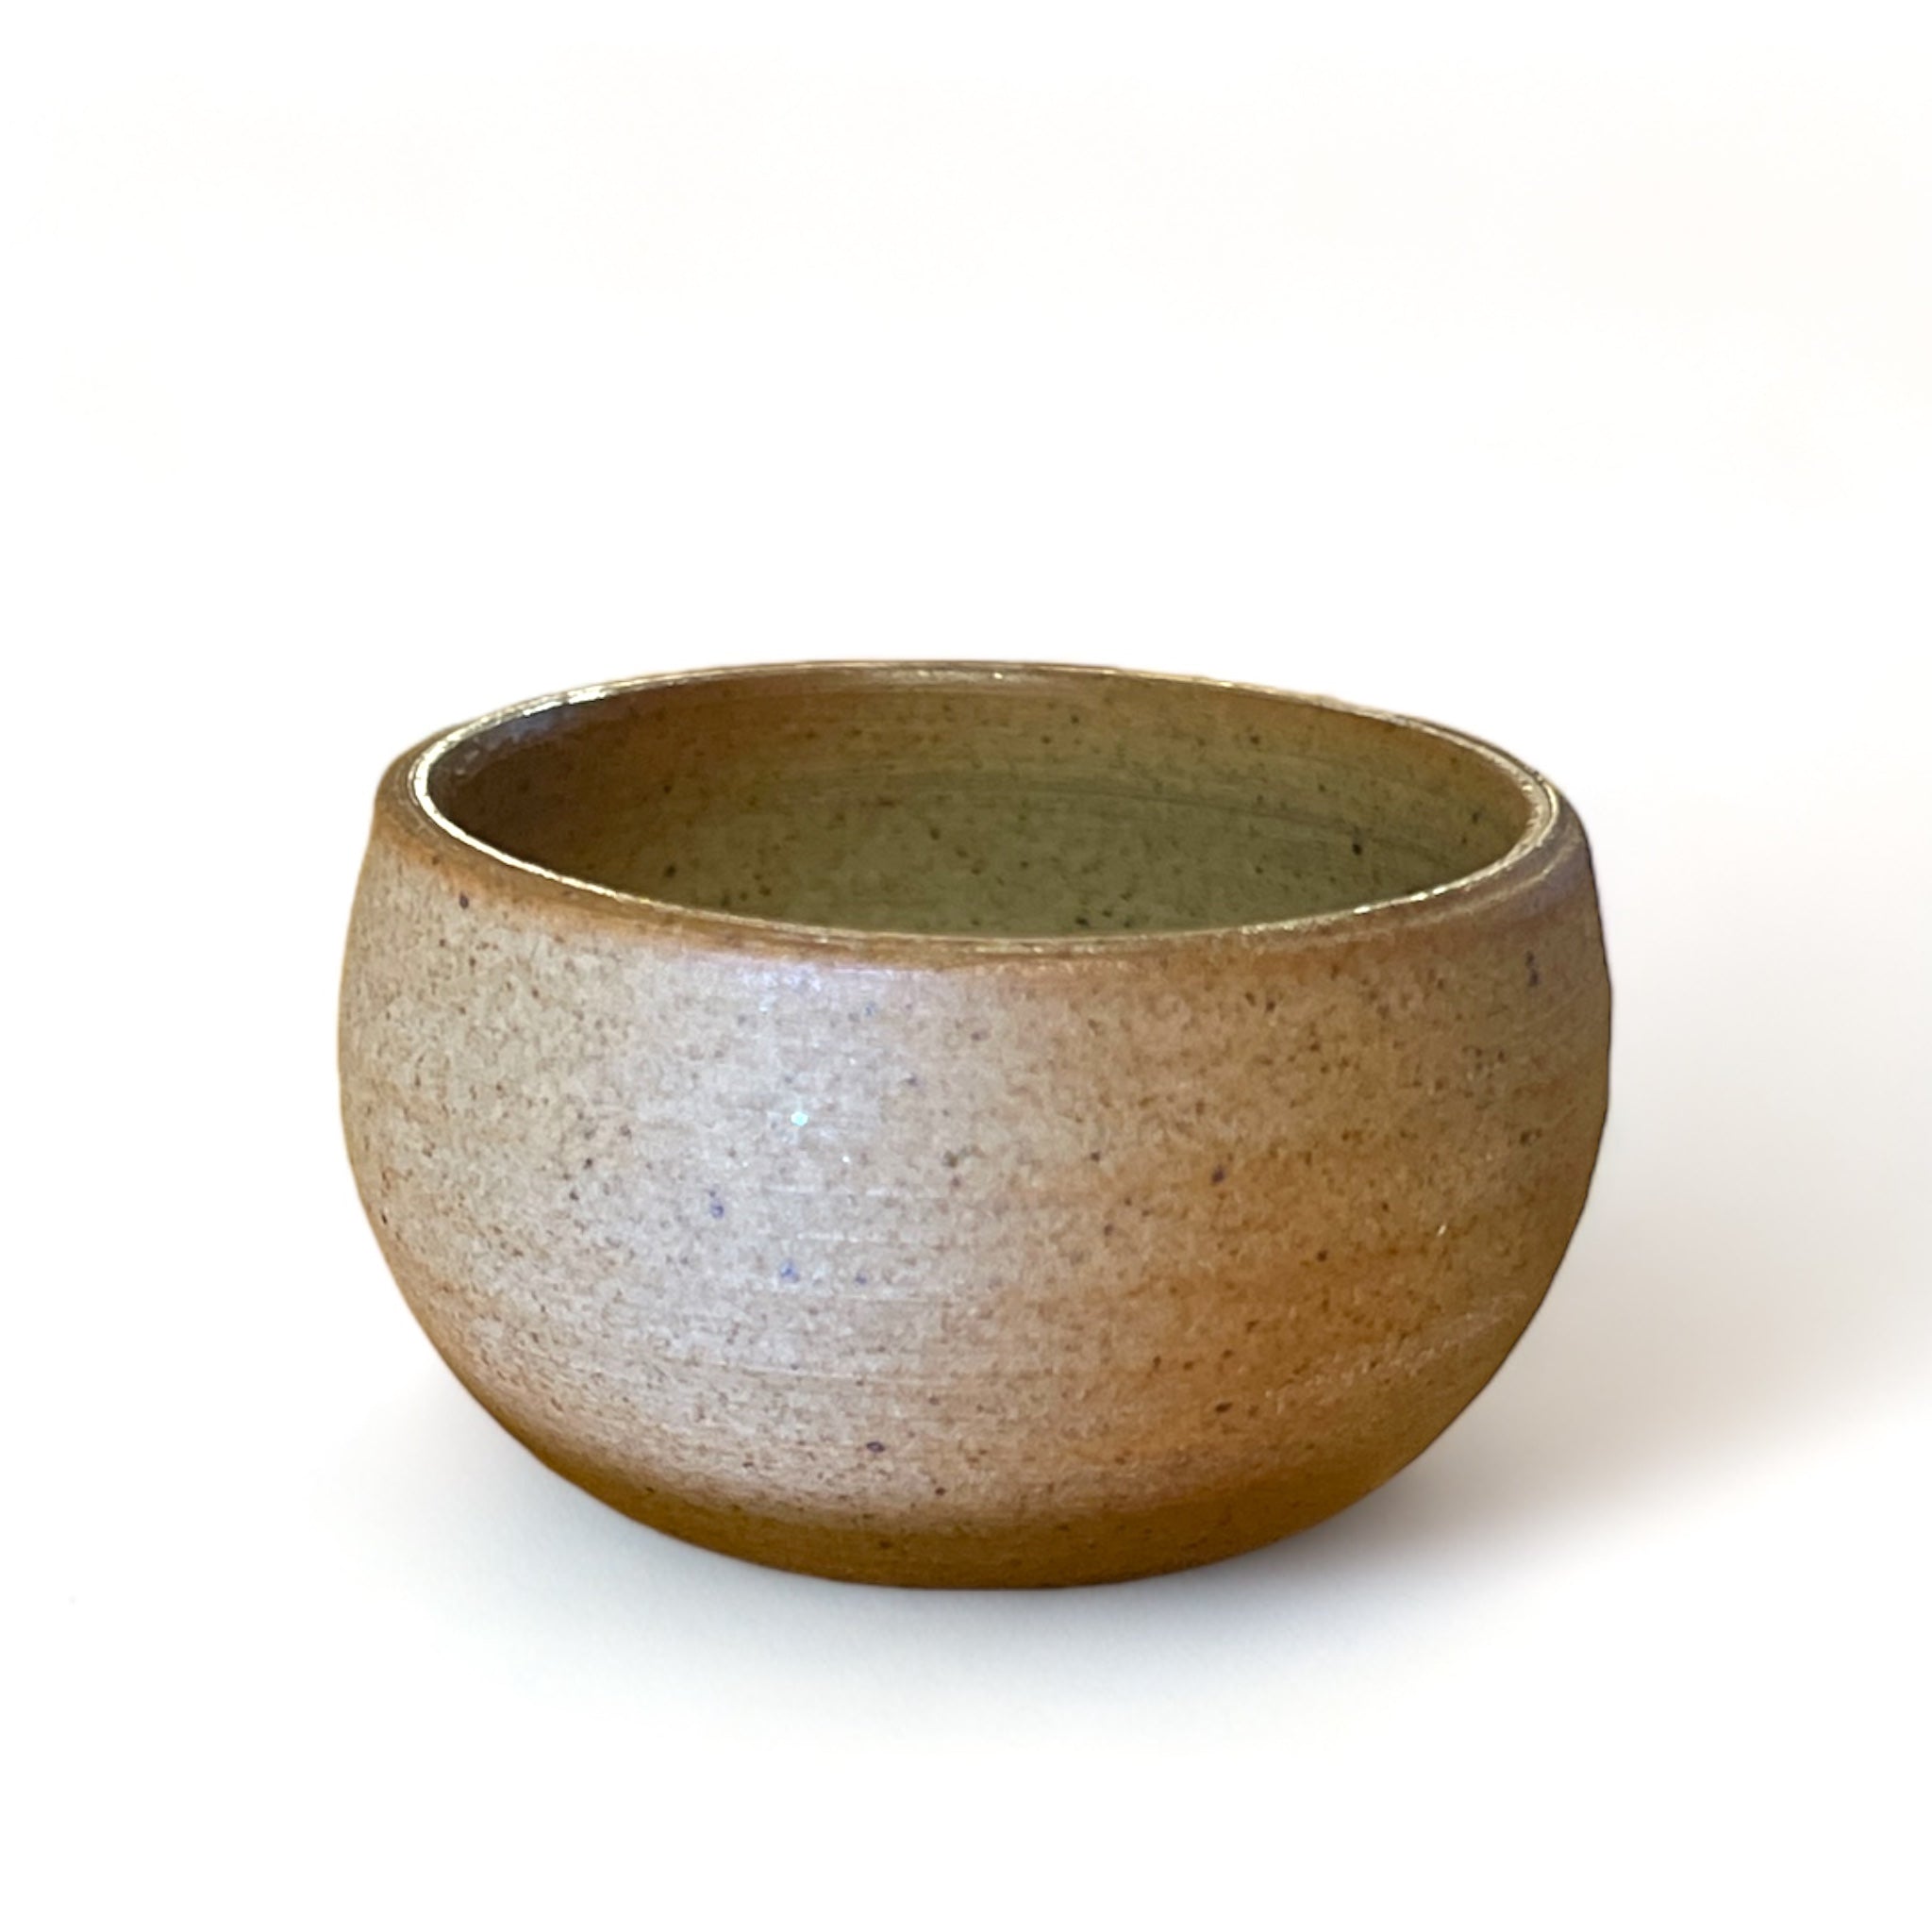 Taiwanese Handmade Wood-Fired Ceramic Teacup - Harvest Moon